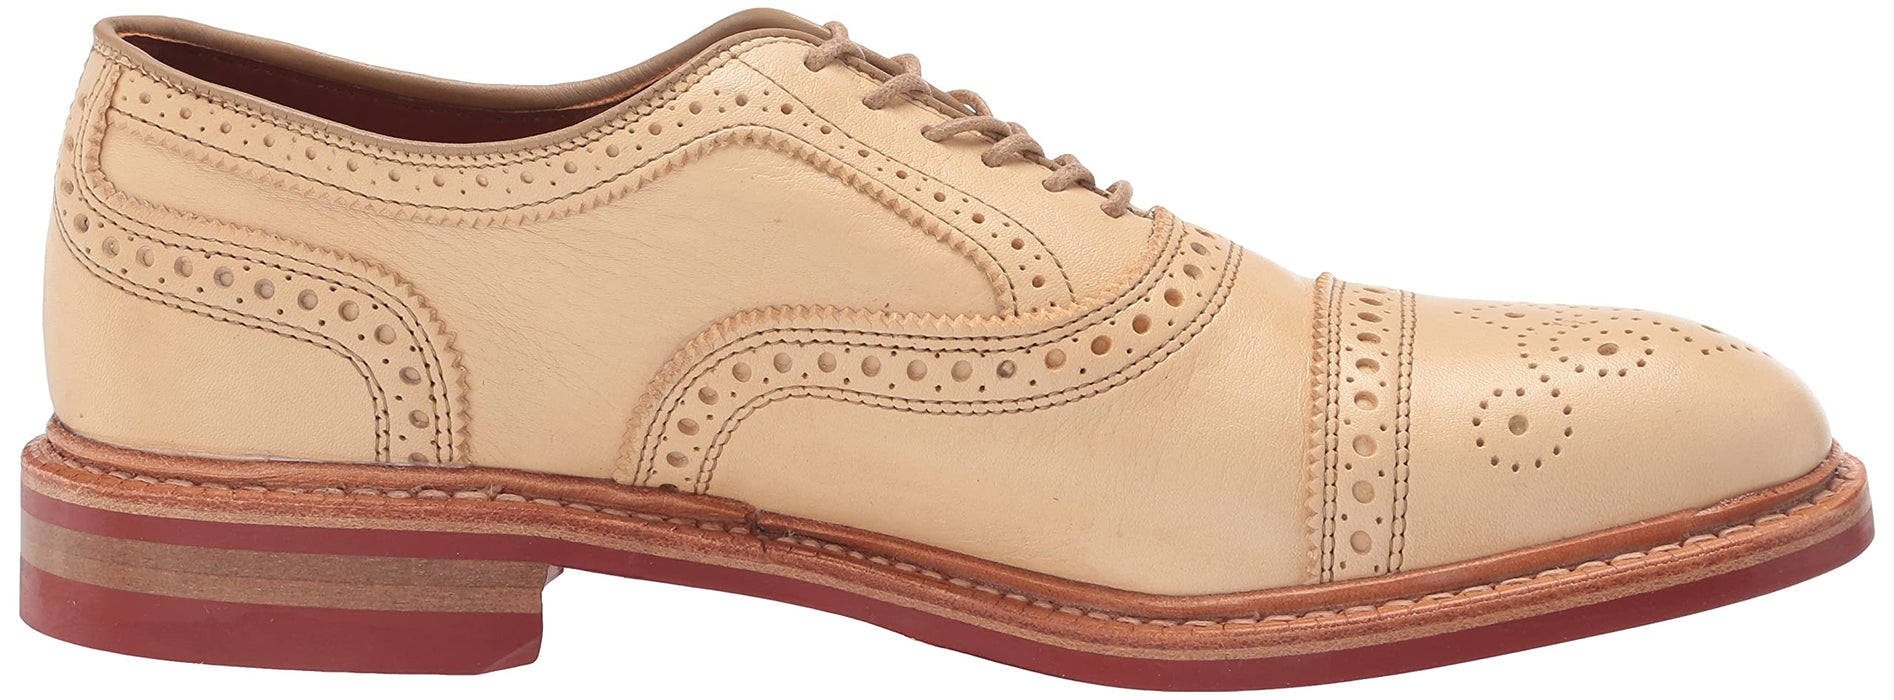 Allen Edmonds Men's Strandmok Oxford Shoe